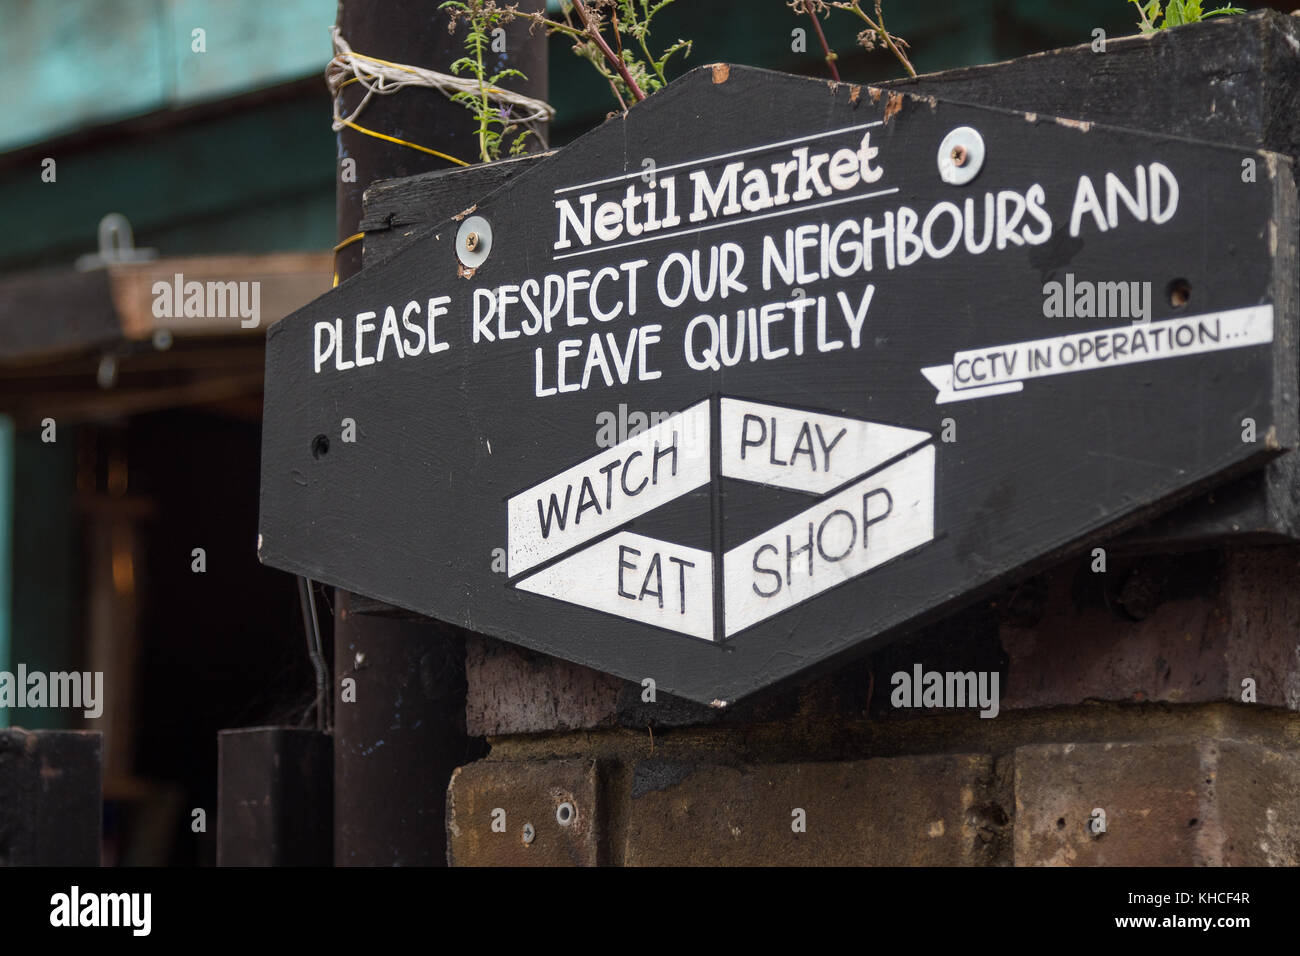 A sign just outside Netil Market in Hackney, London Stock Photo